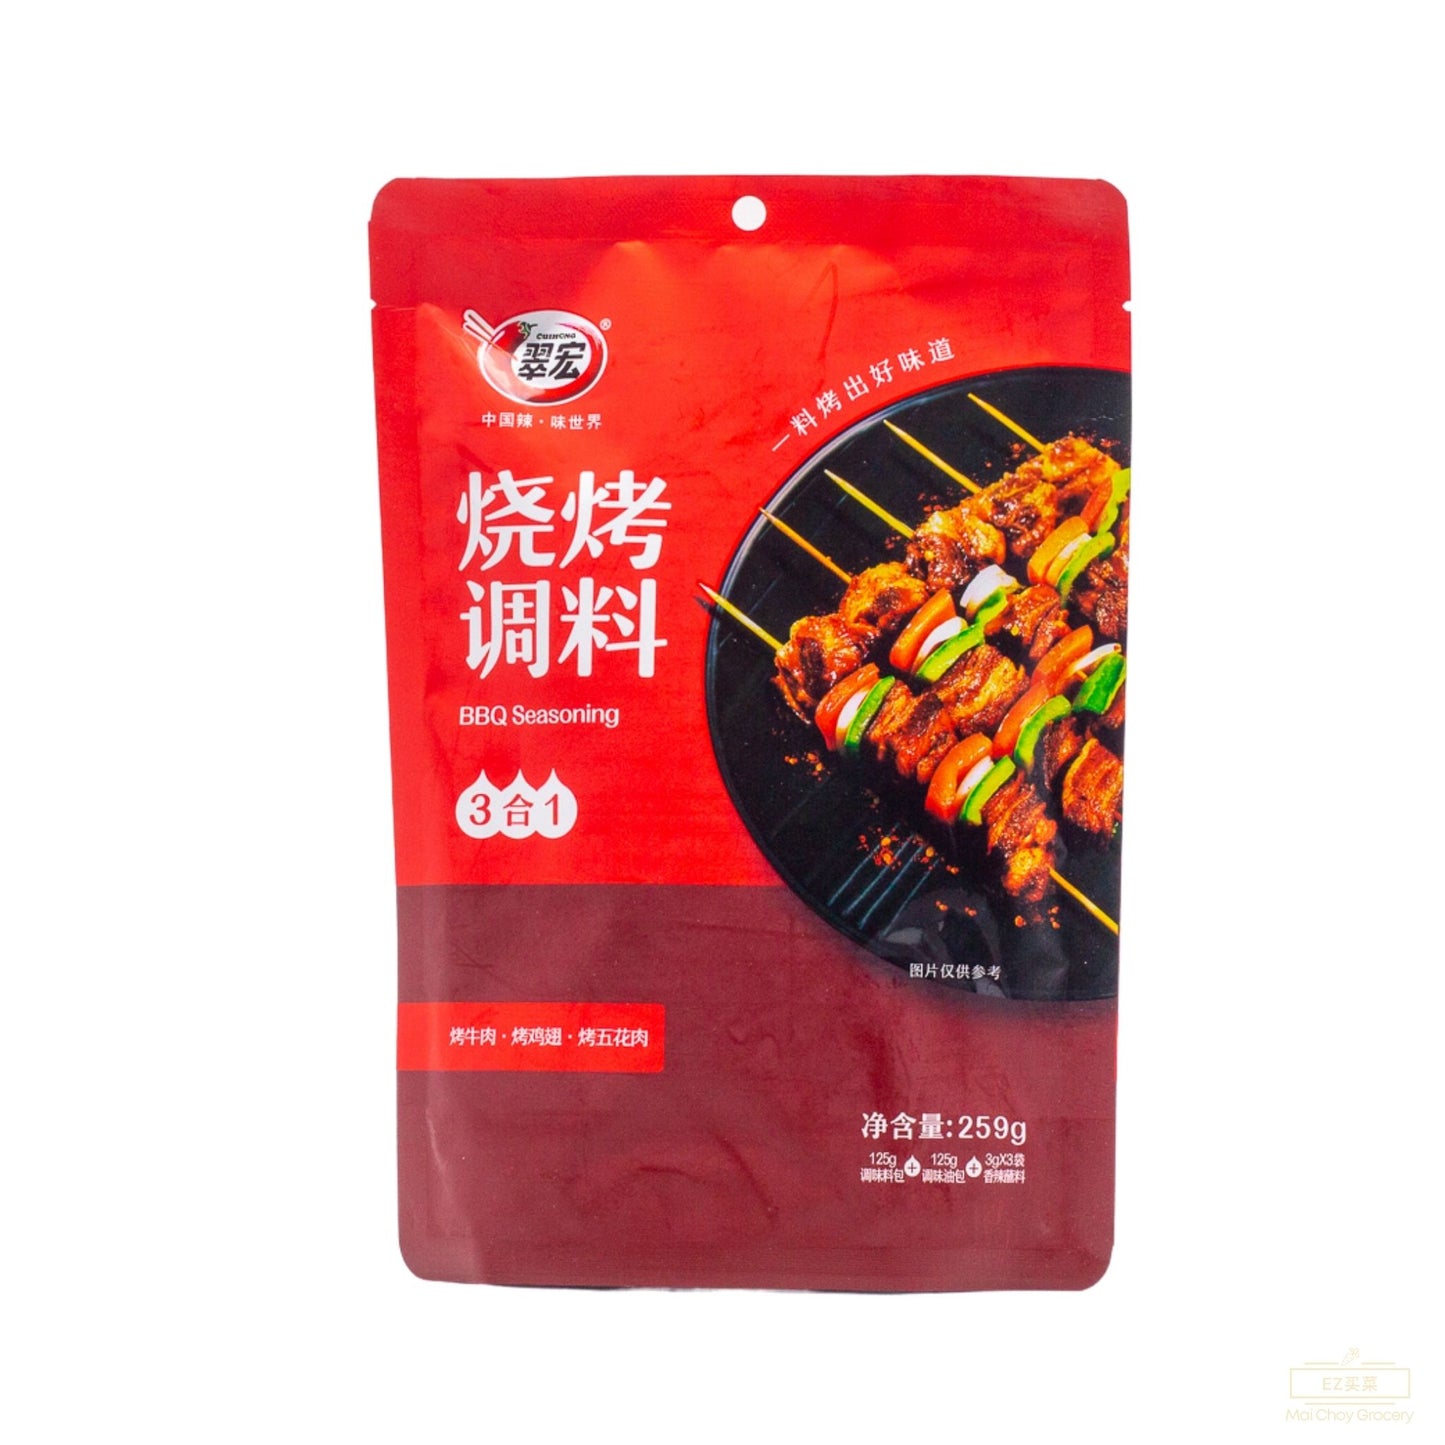 CUIHONG  BBQ Seasoning翠宏烧烤调料3 in 1 (259g)